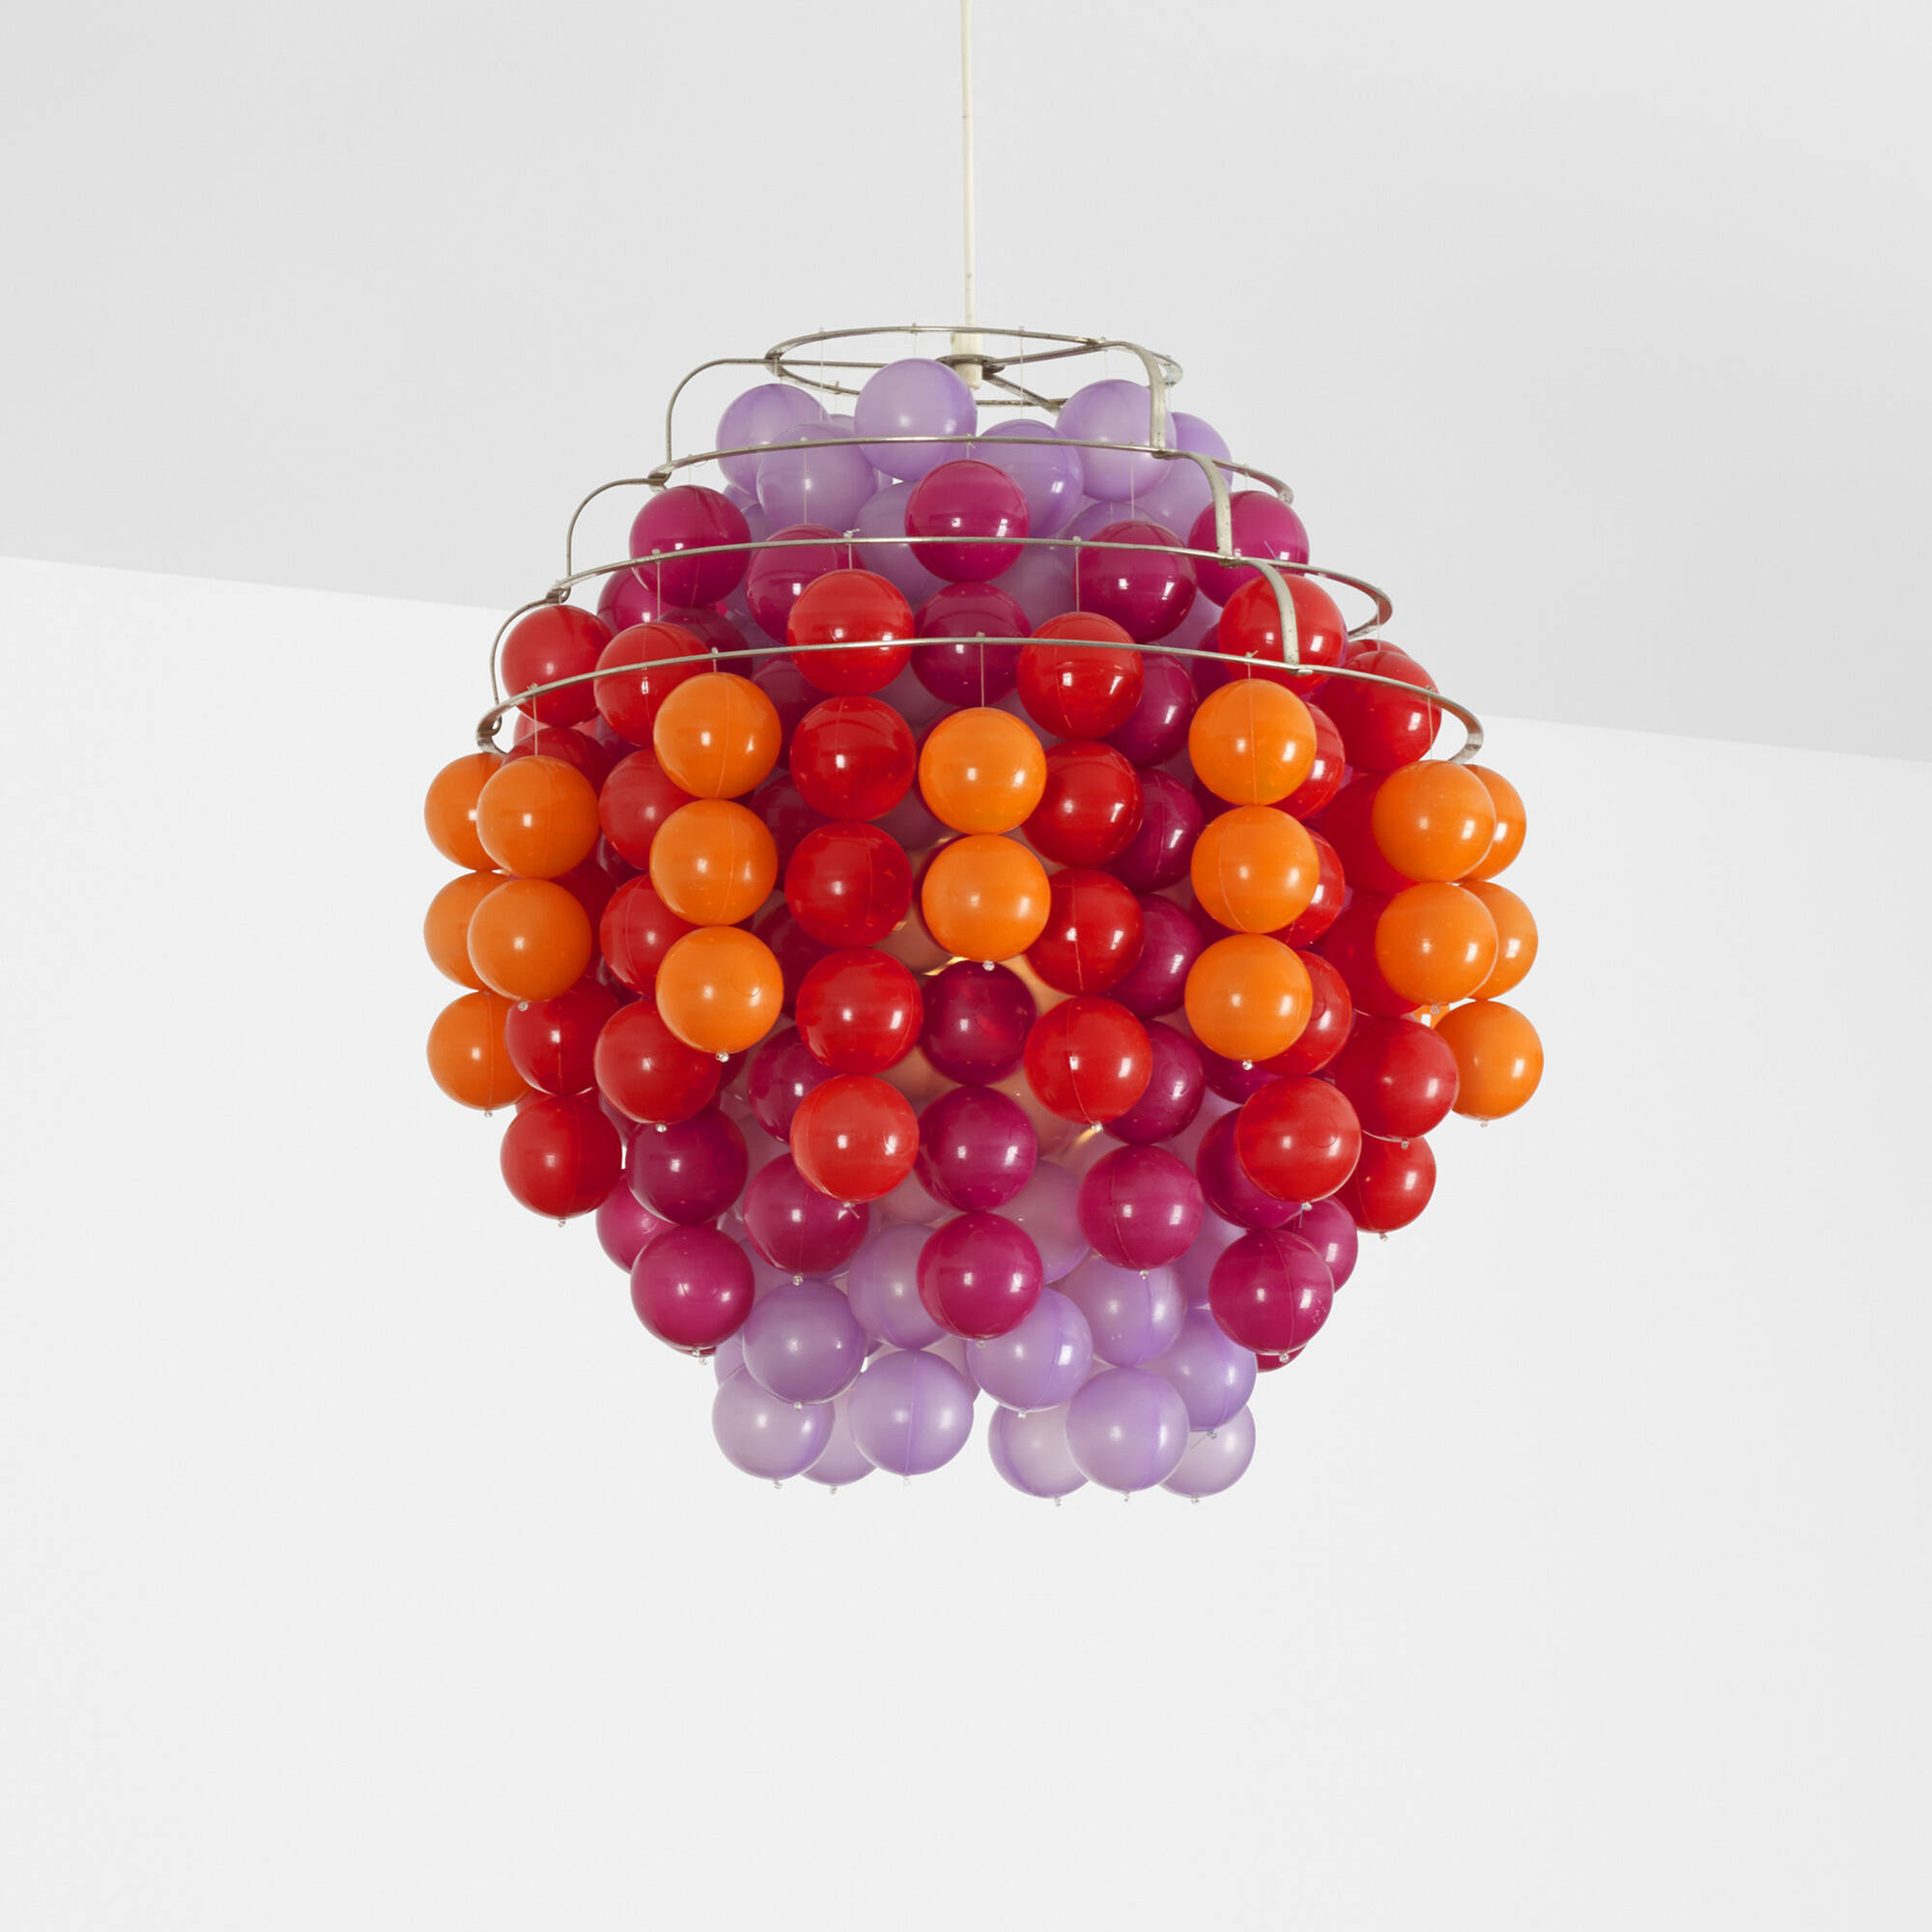 232: VERNER PANTON, Ball Lamp < Design, 12 December 2013 